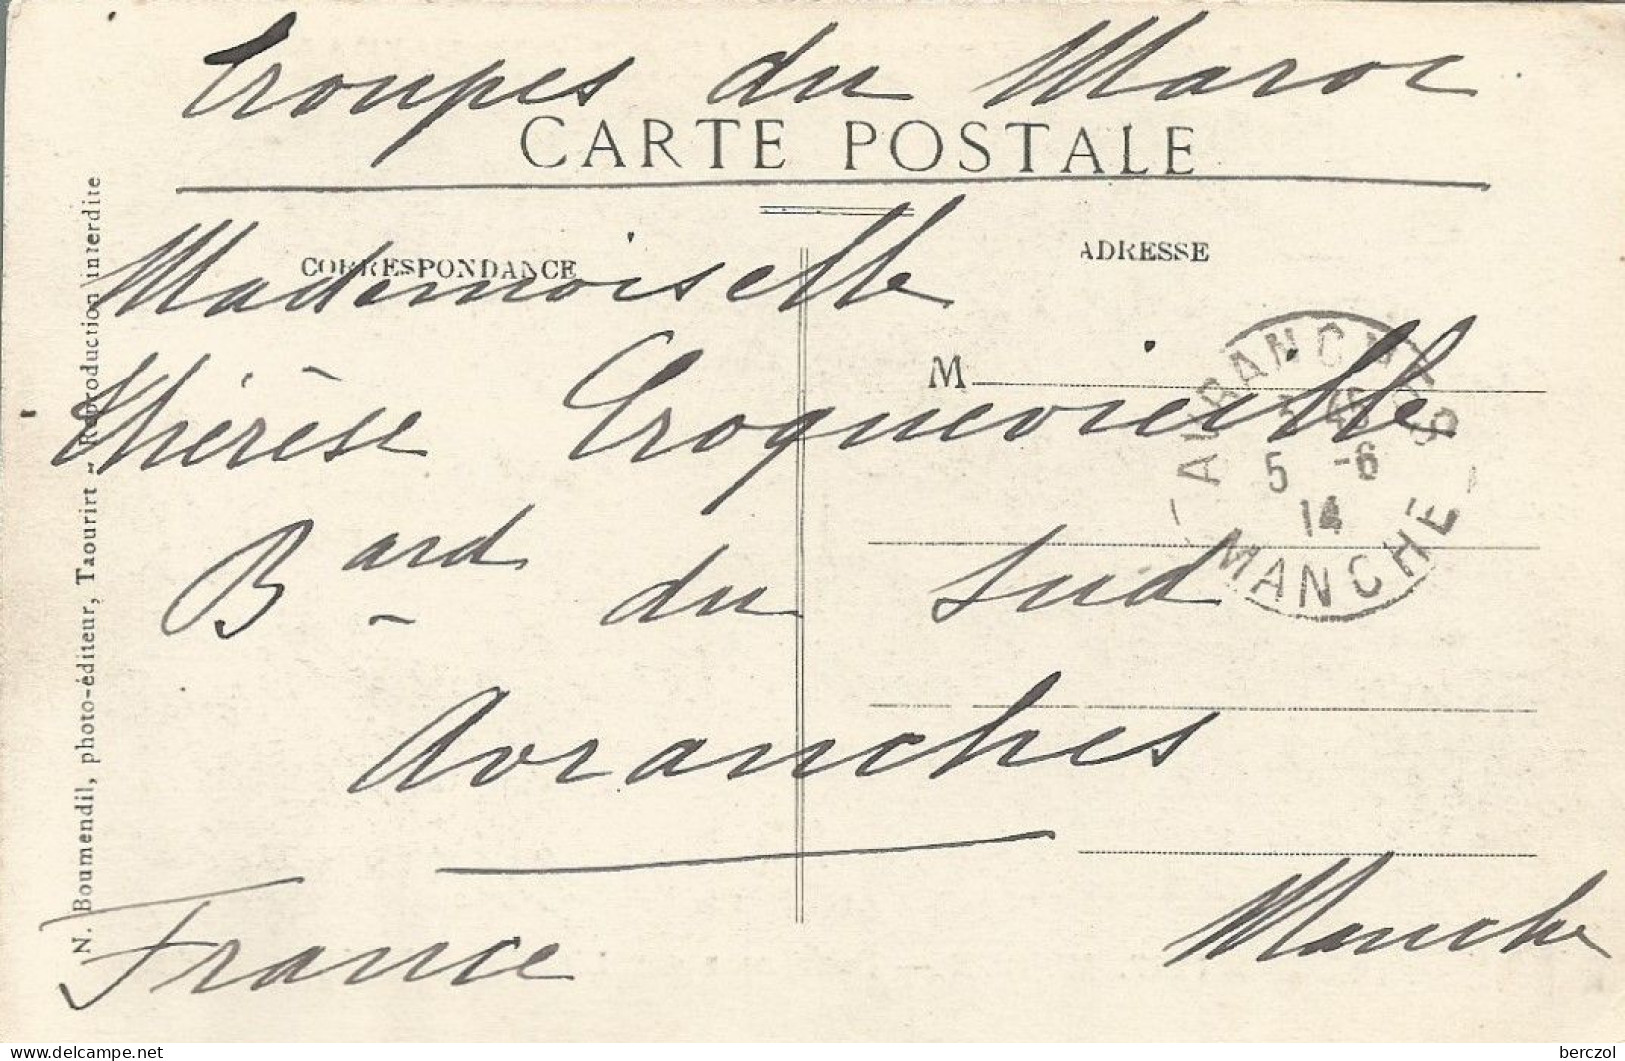 FRANCE ANNEE 1914 CPA INFIRMERIE ANBULANCE DE KASBAT M'COUN 5/6/14 FRANCHISE MILITAIRE TB - Croce Rossa